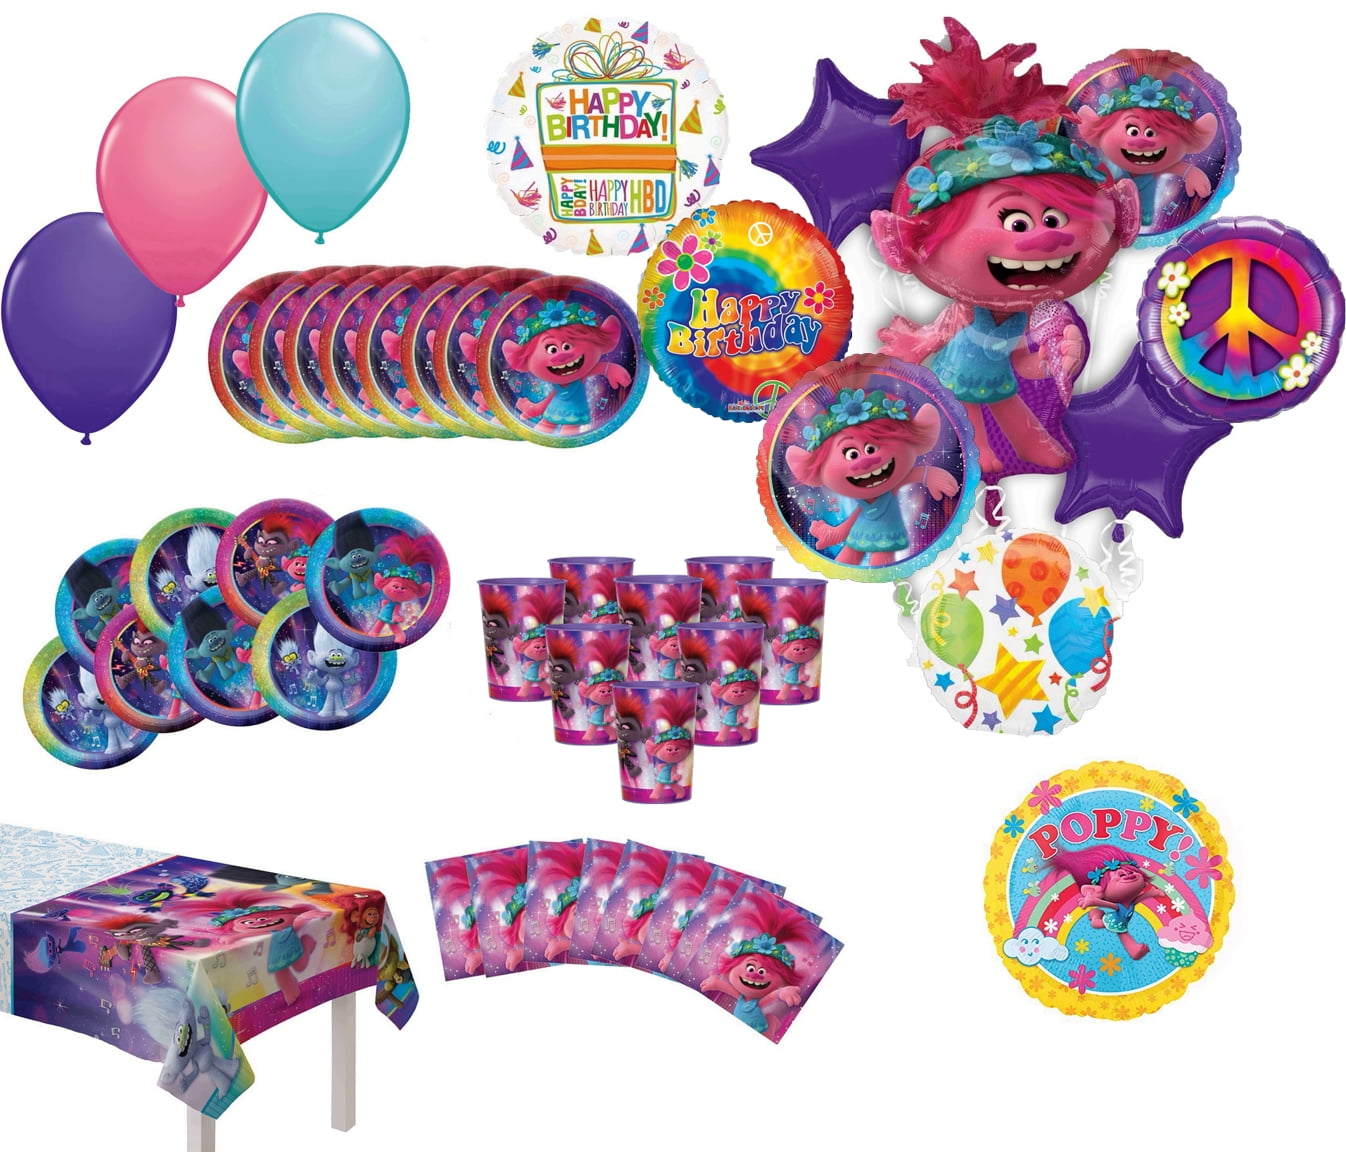 TROLLS World Tour FRIENDSHIP BRACELETS KITS (8) ~ Birthday Party Supplies  Toys